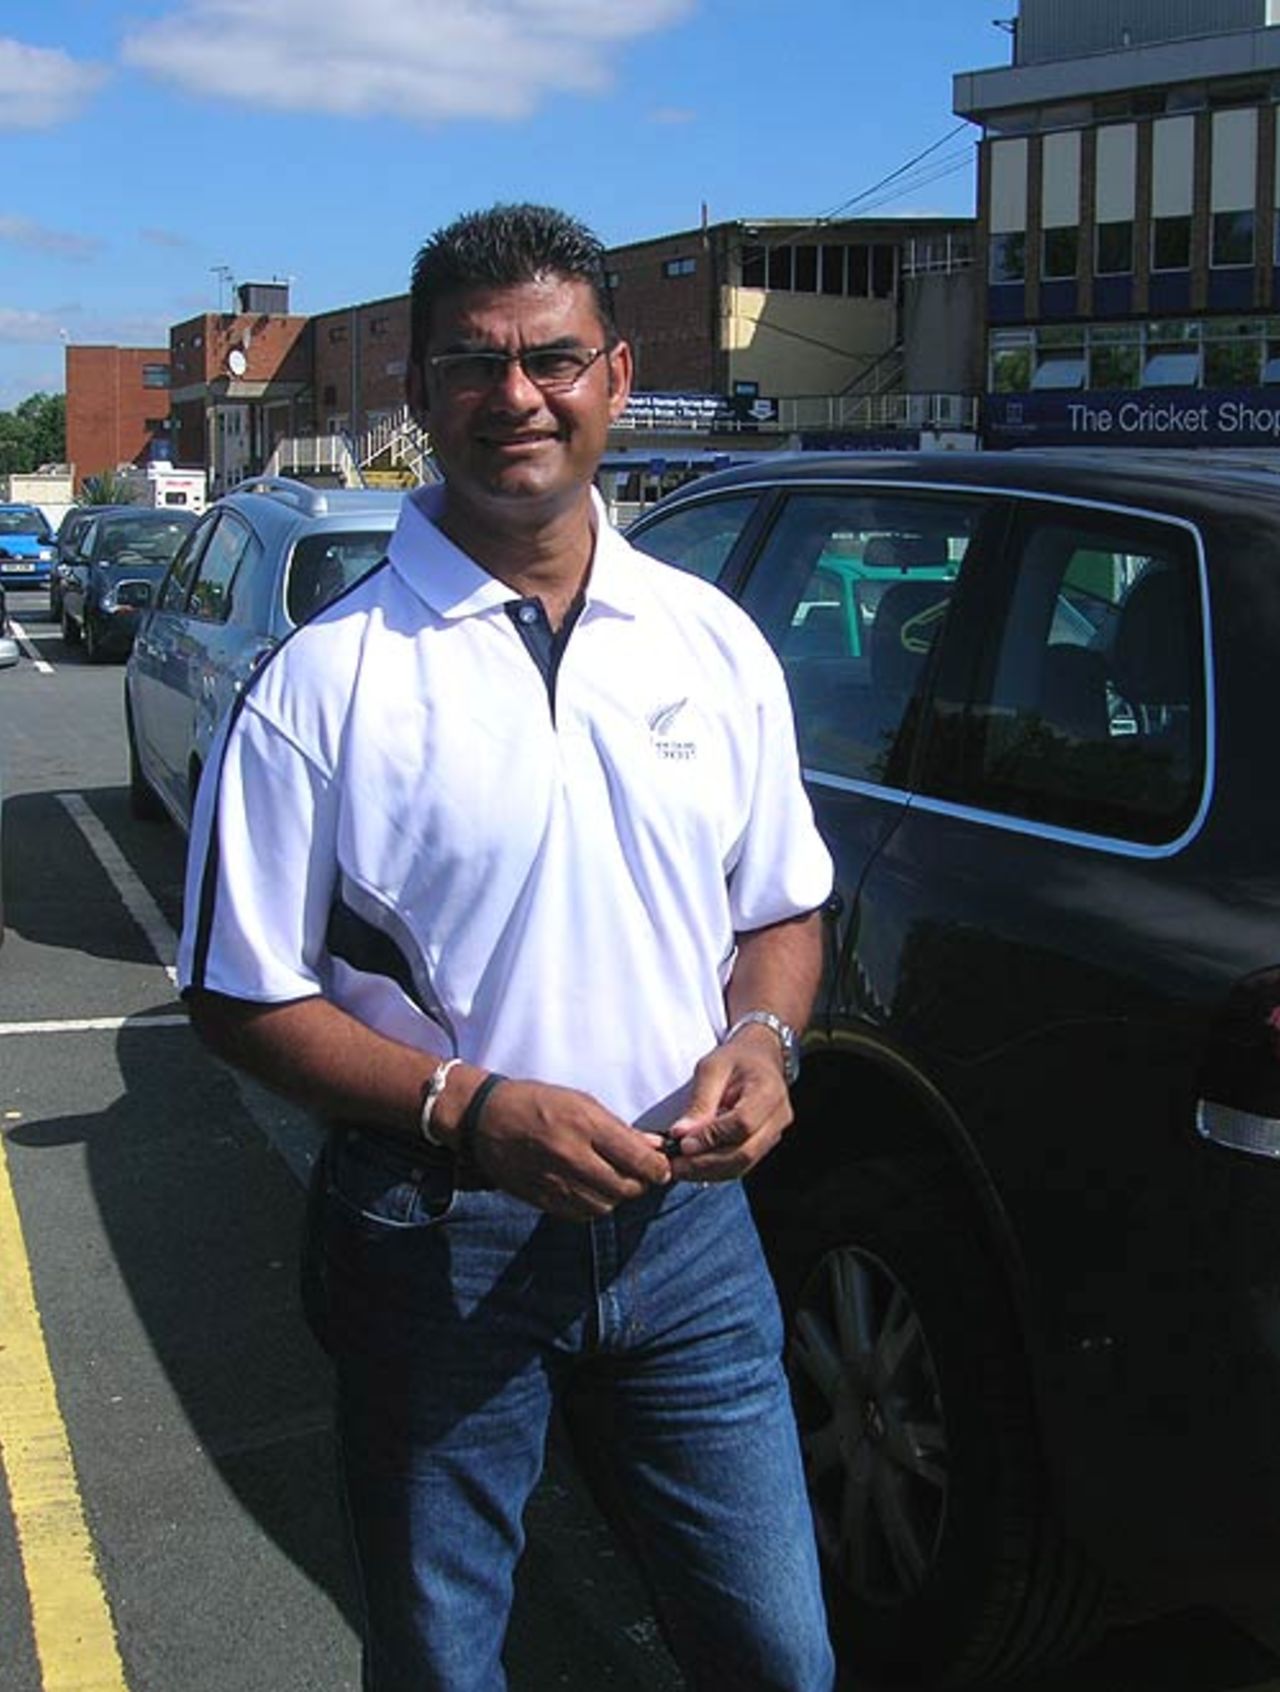 Dipak Patel poses outside Edgbaston, Birmingham, August 27, 2007 